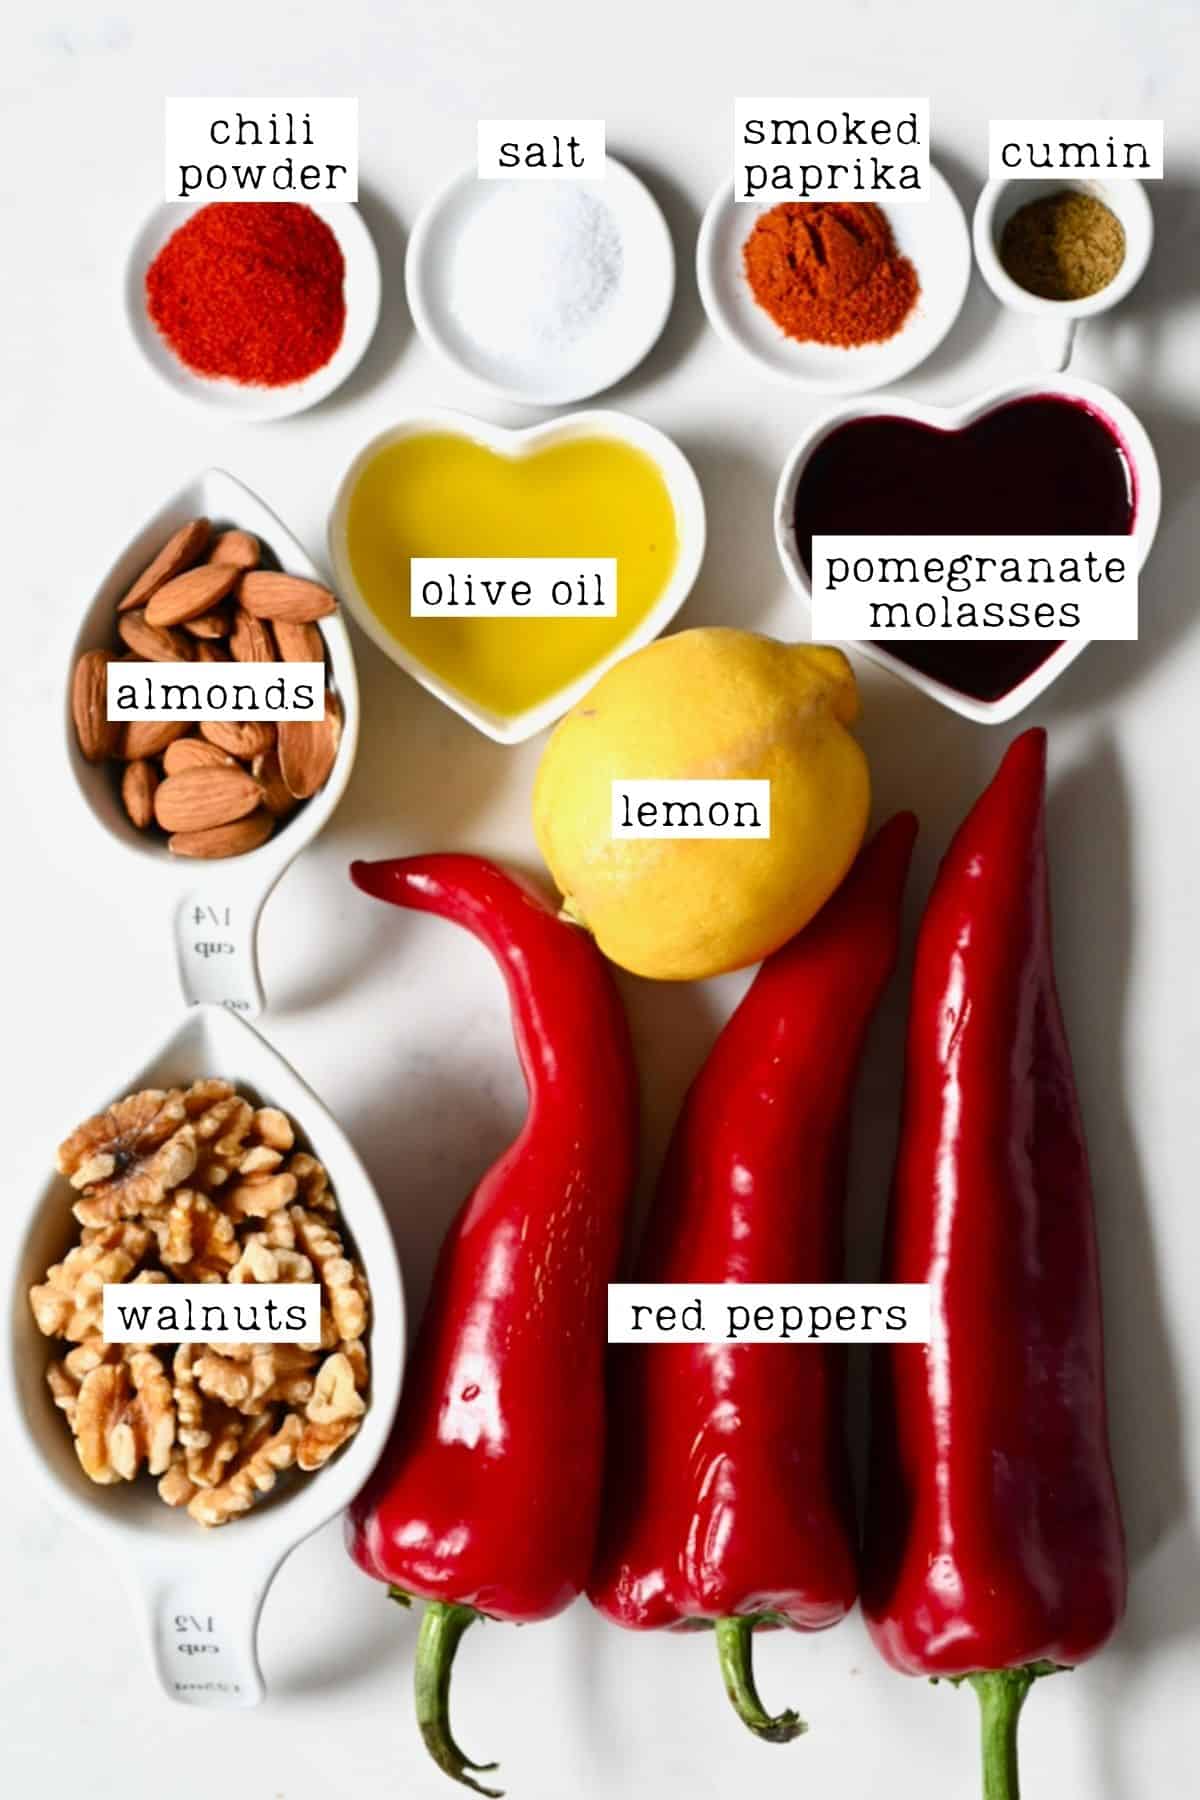 Ingredients for muhammara